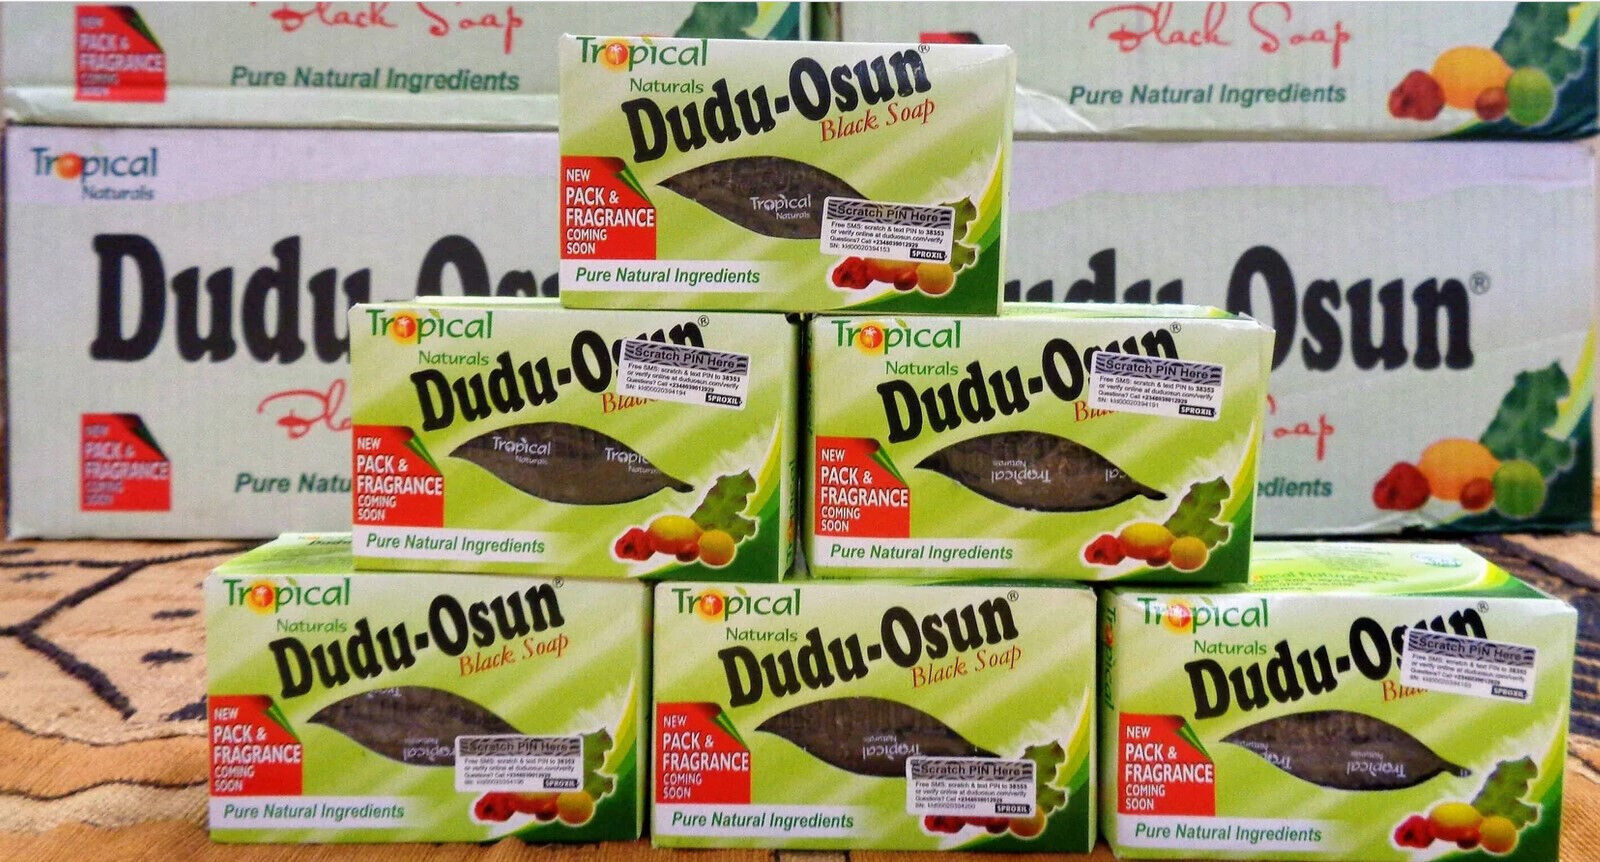 24 BARS 100% All Natural Dudu Osun Black Soap Anti Acne,Fungus,Blemish,Psoriasis - $66.33